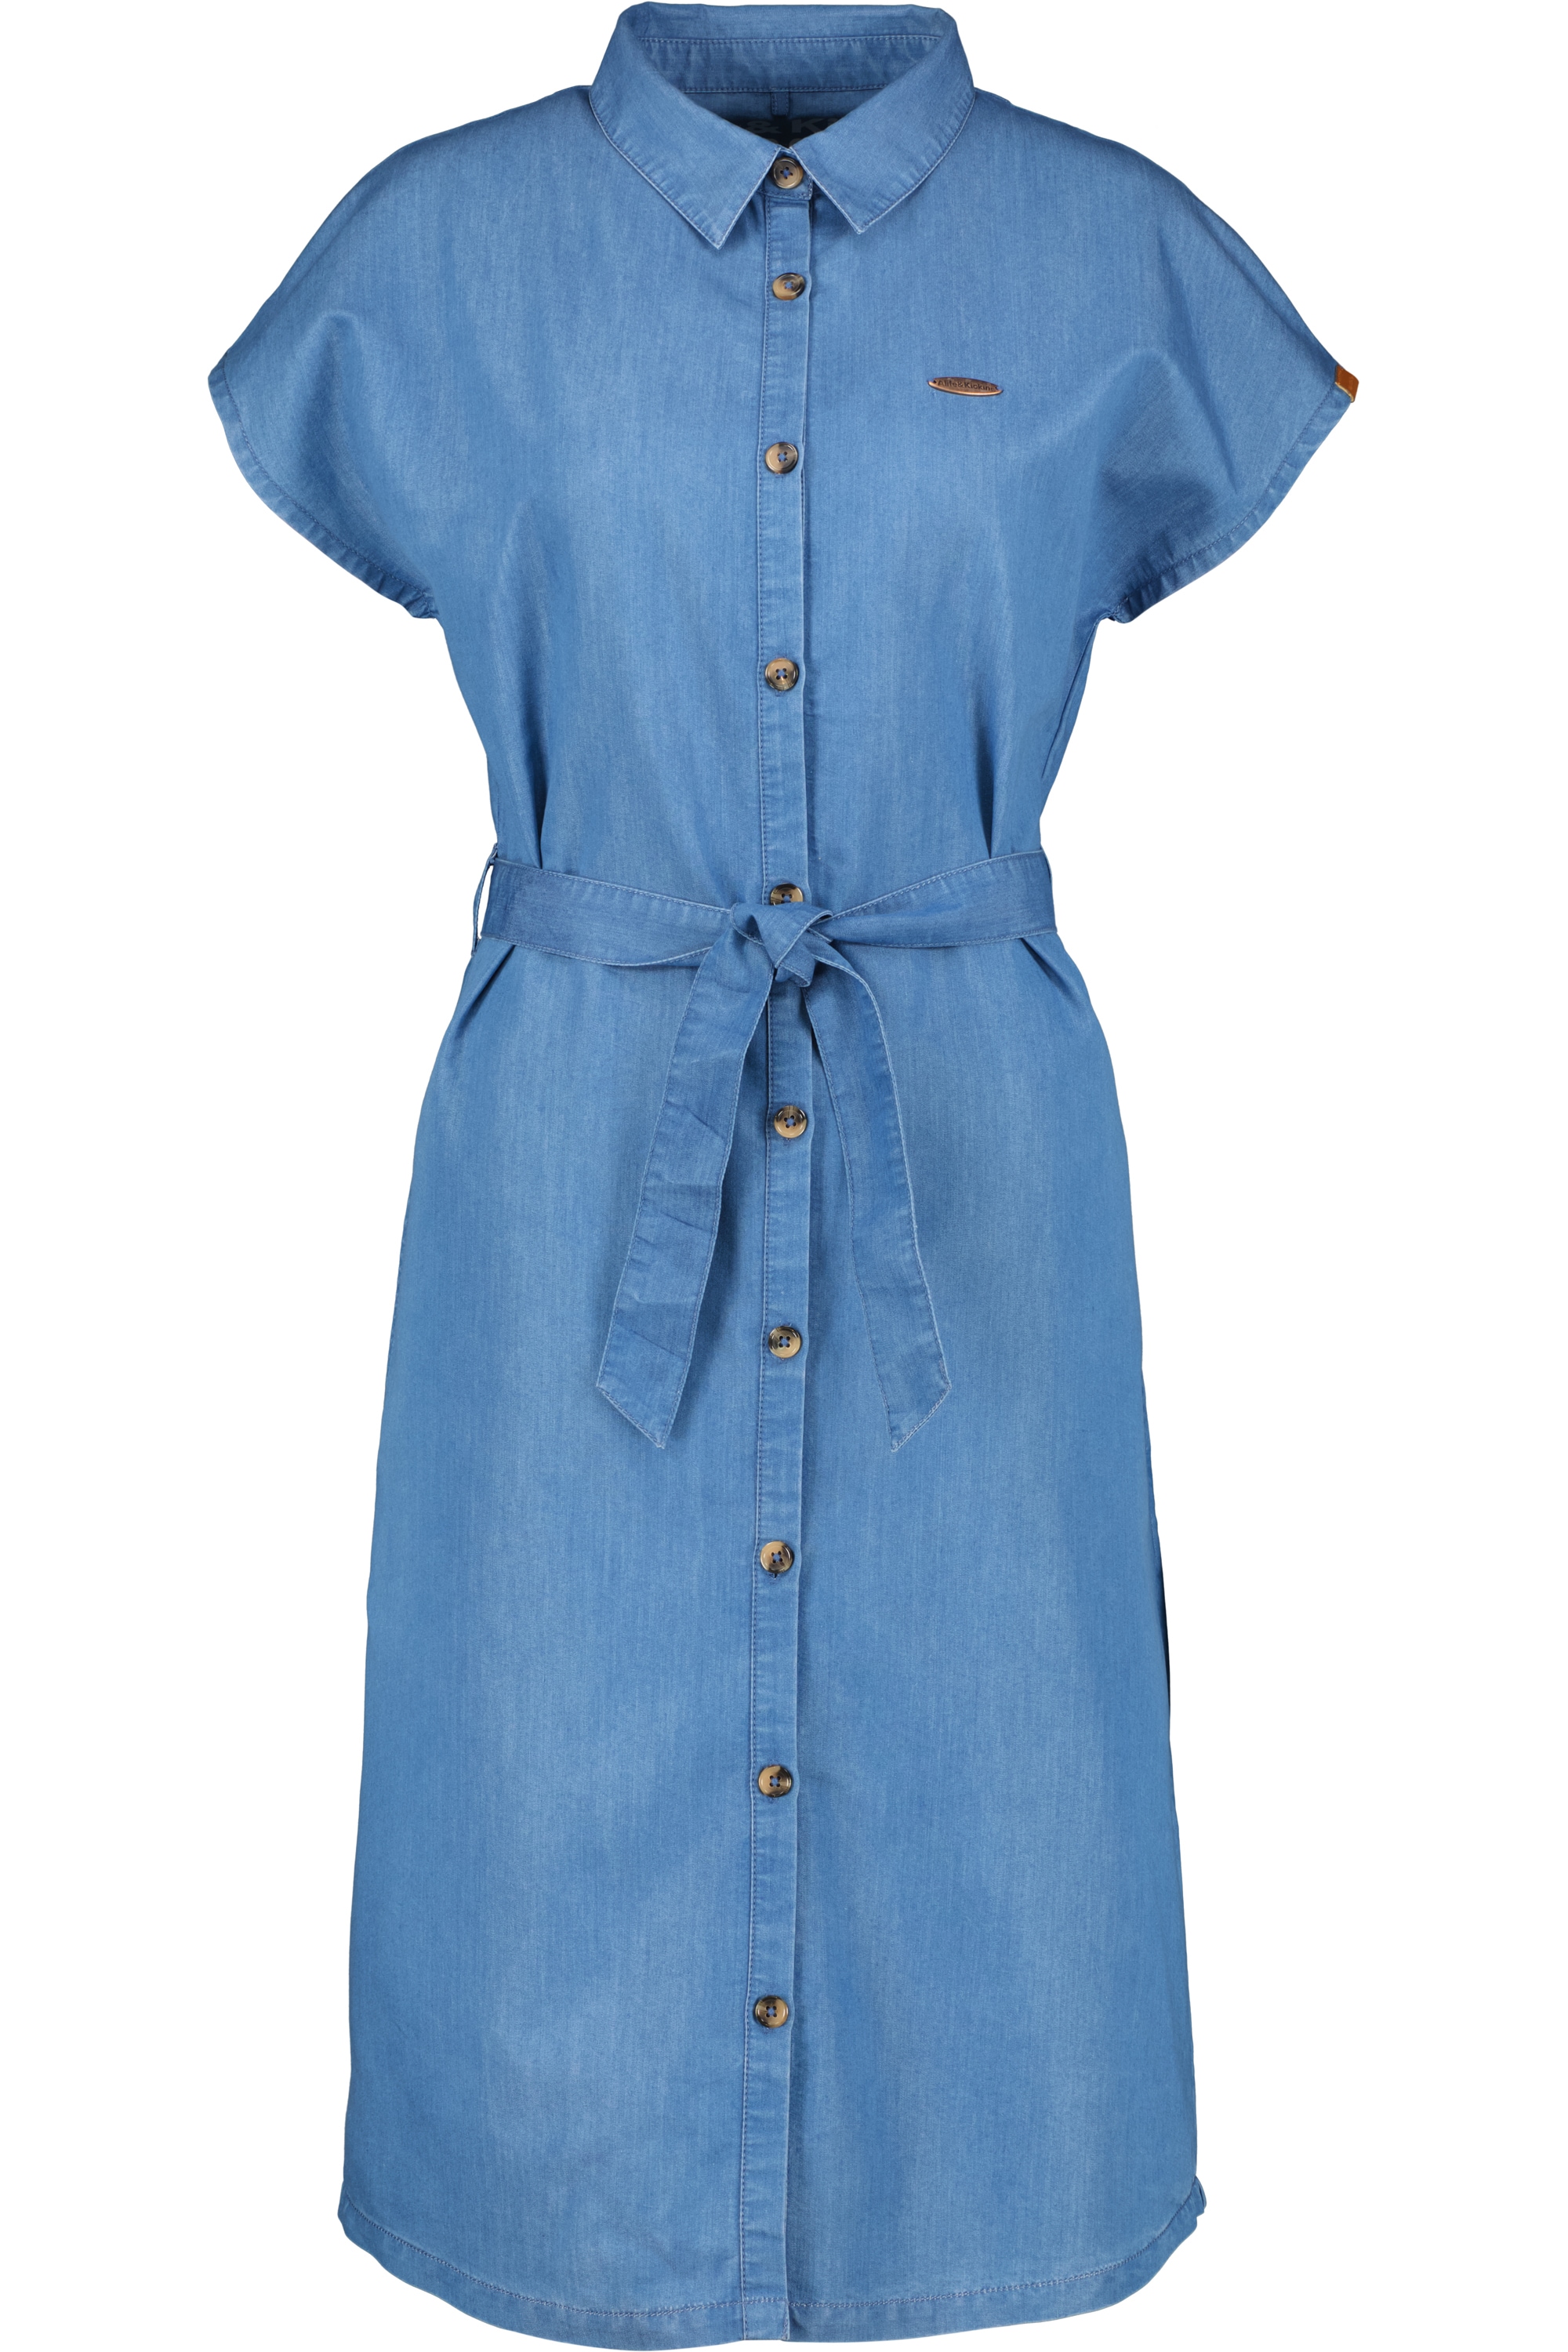 Alife & Kickin Jeanskleid »MaeveAK Kleid« Shirt BAUR DNM kaufen Dress A | Damen Jeanskleid